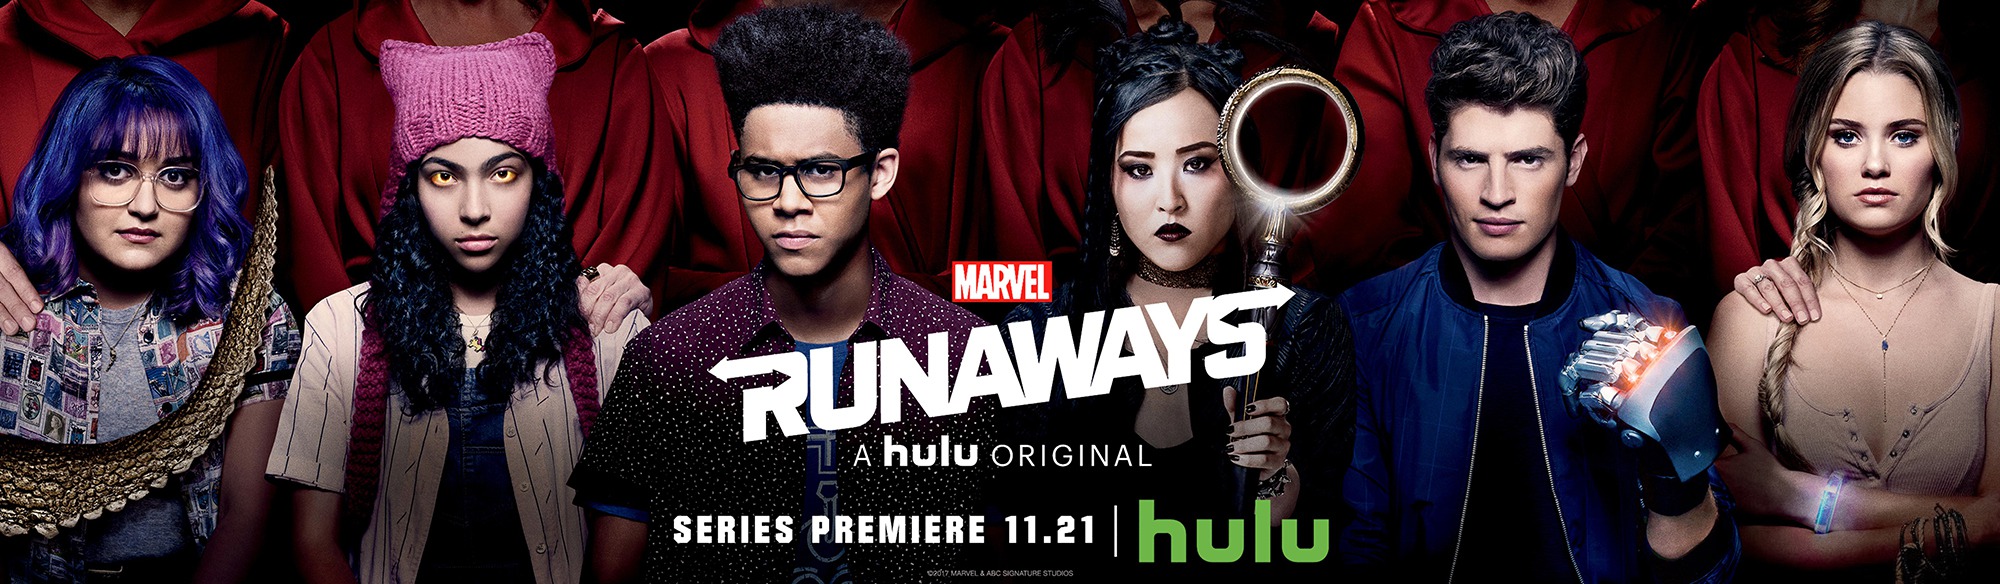 Mega Sized TV Poster Image for Runaways (#8 of 28)